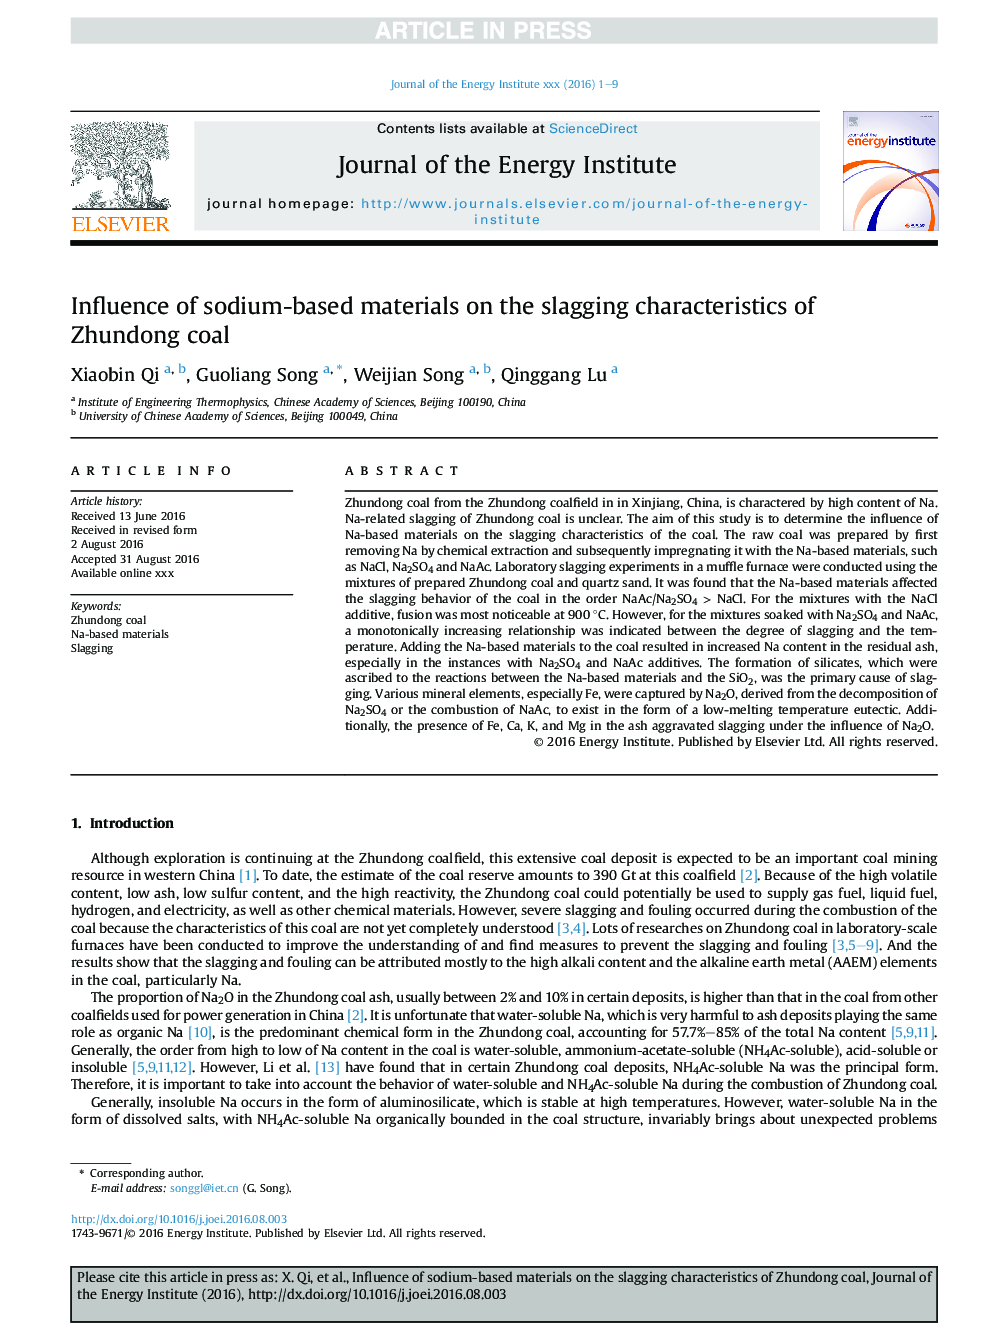 Influence of sodium-based materials on the slagging characteristics of Zhundong coal